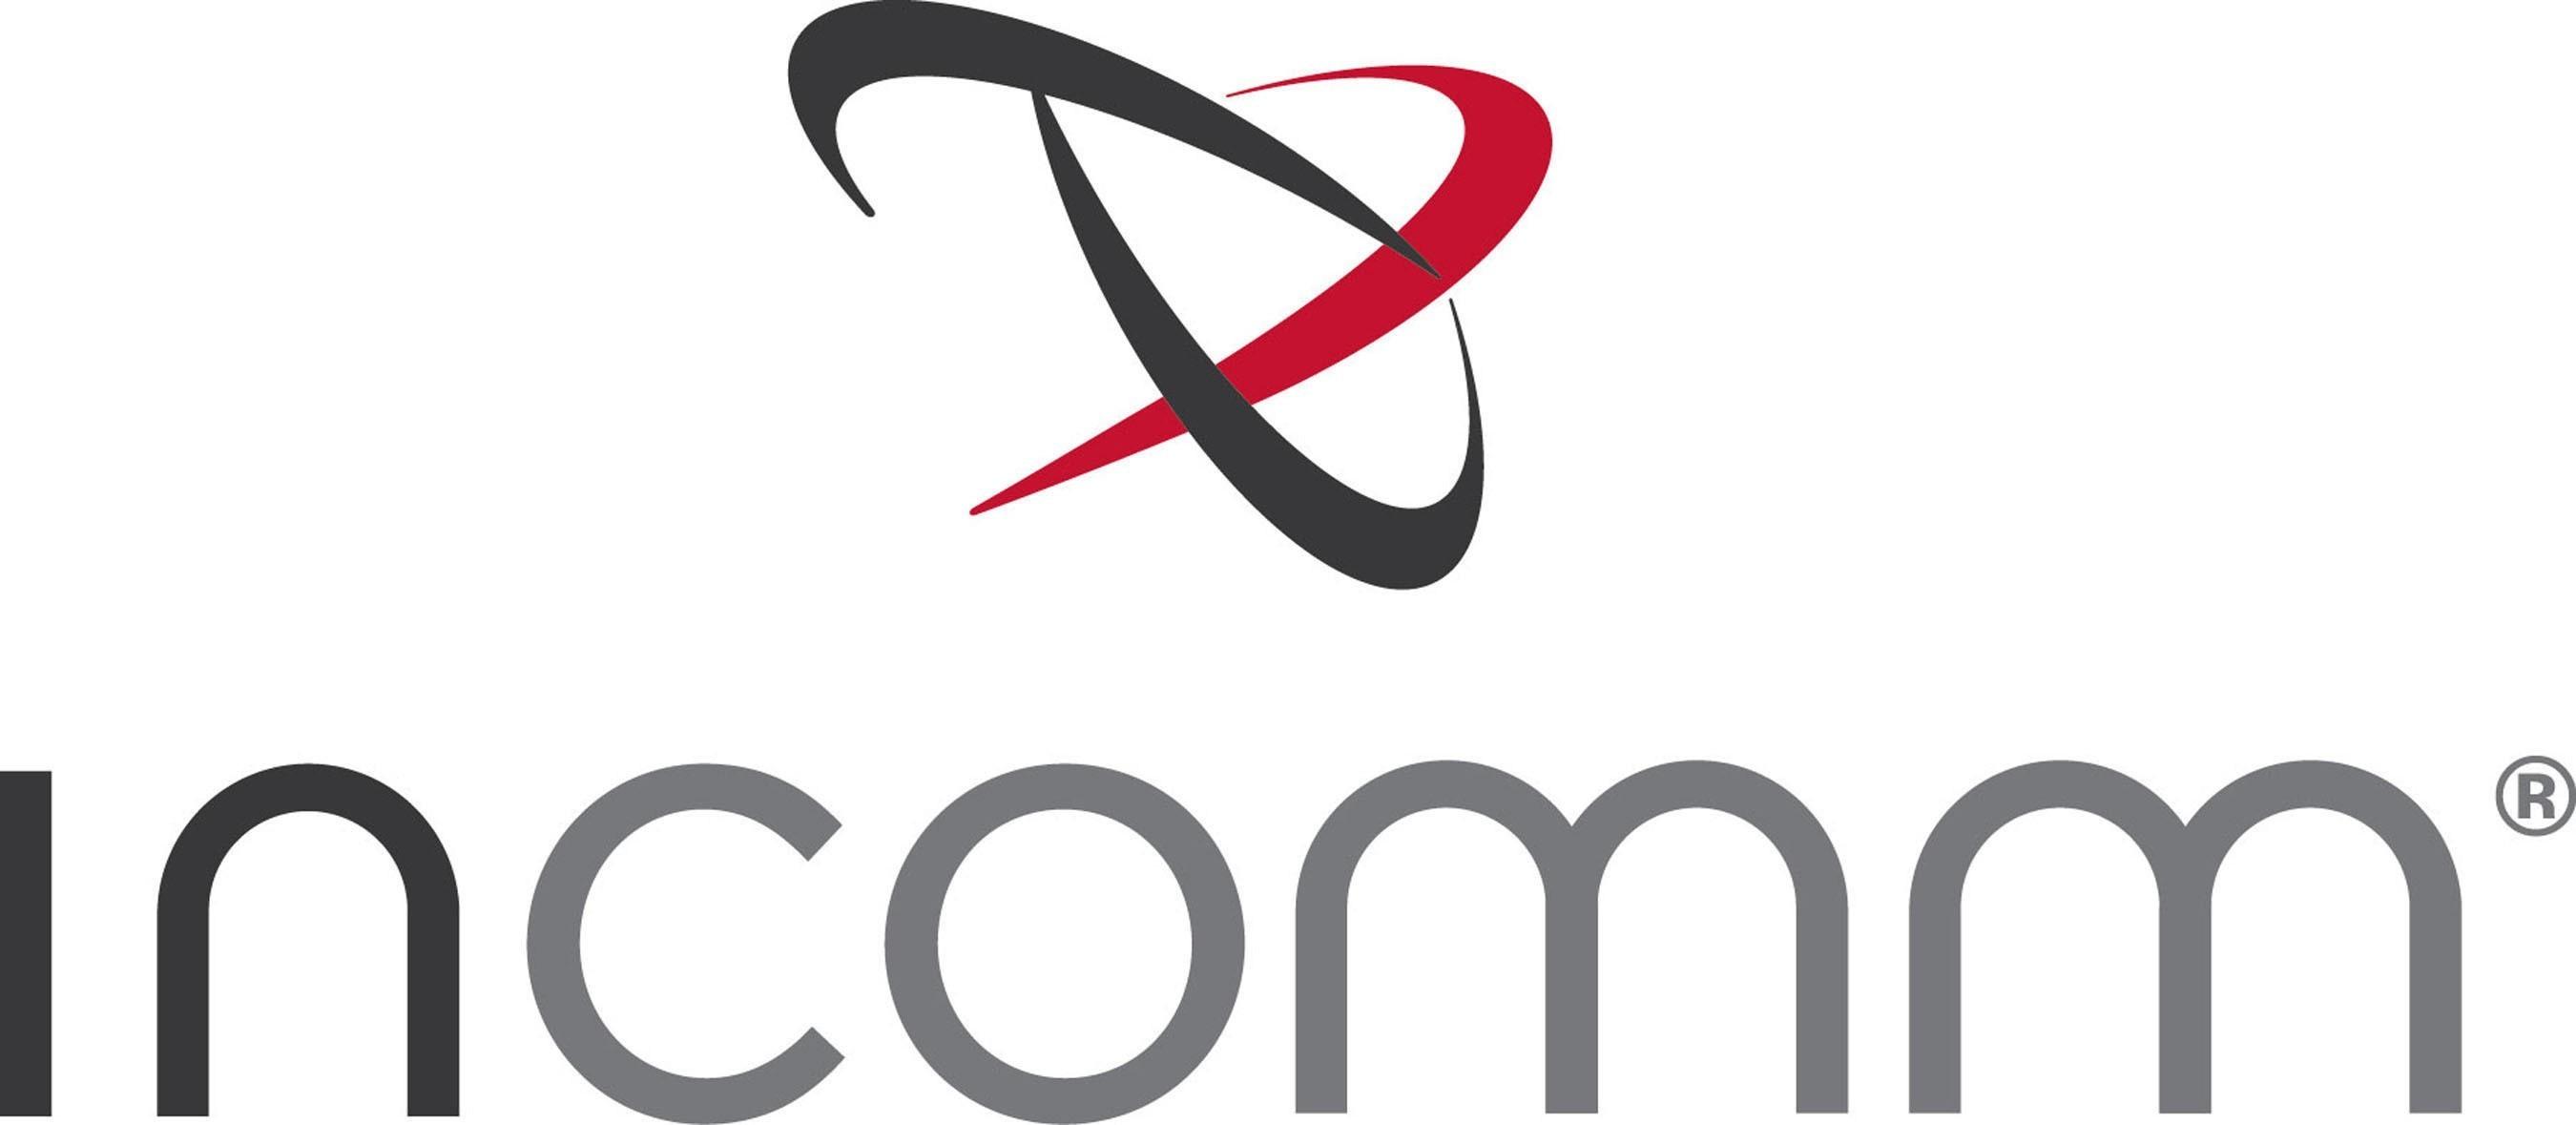 Inncomm Logo - InComm logo Logo